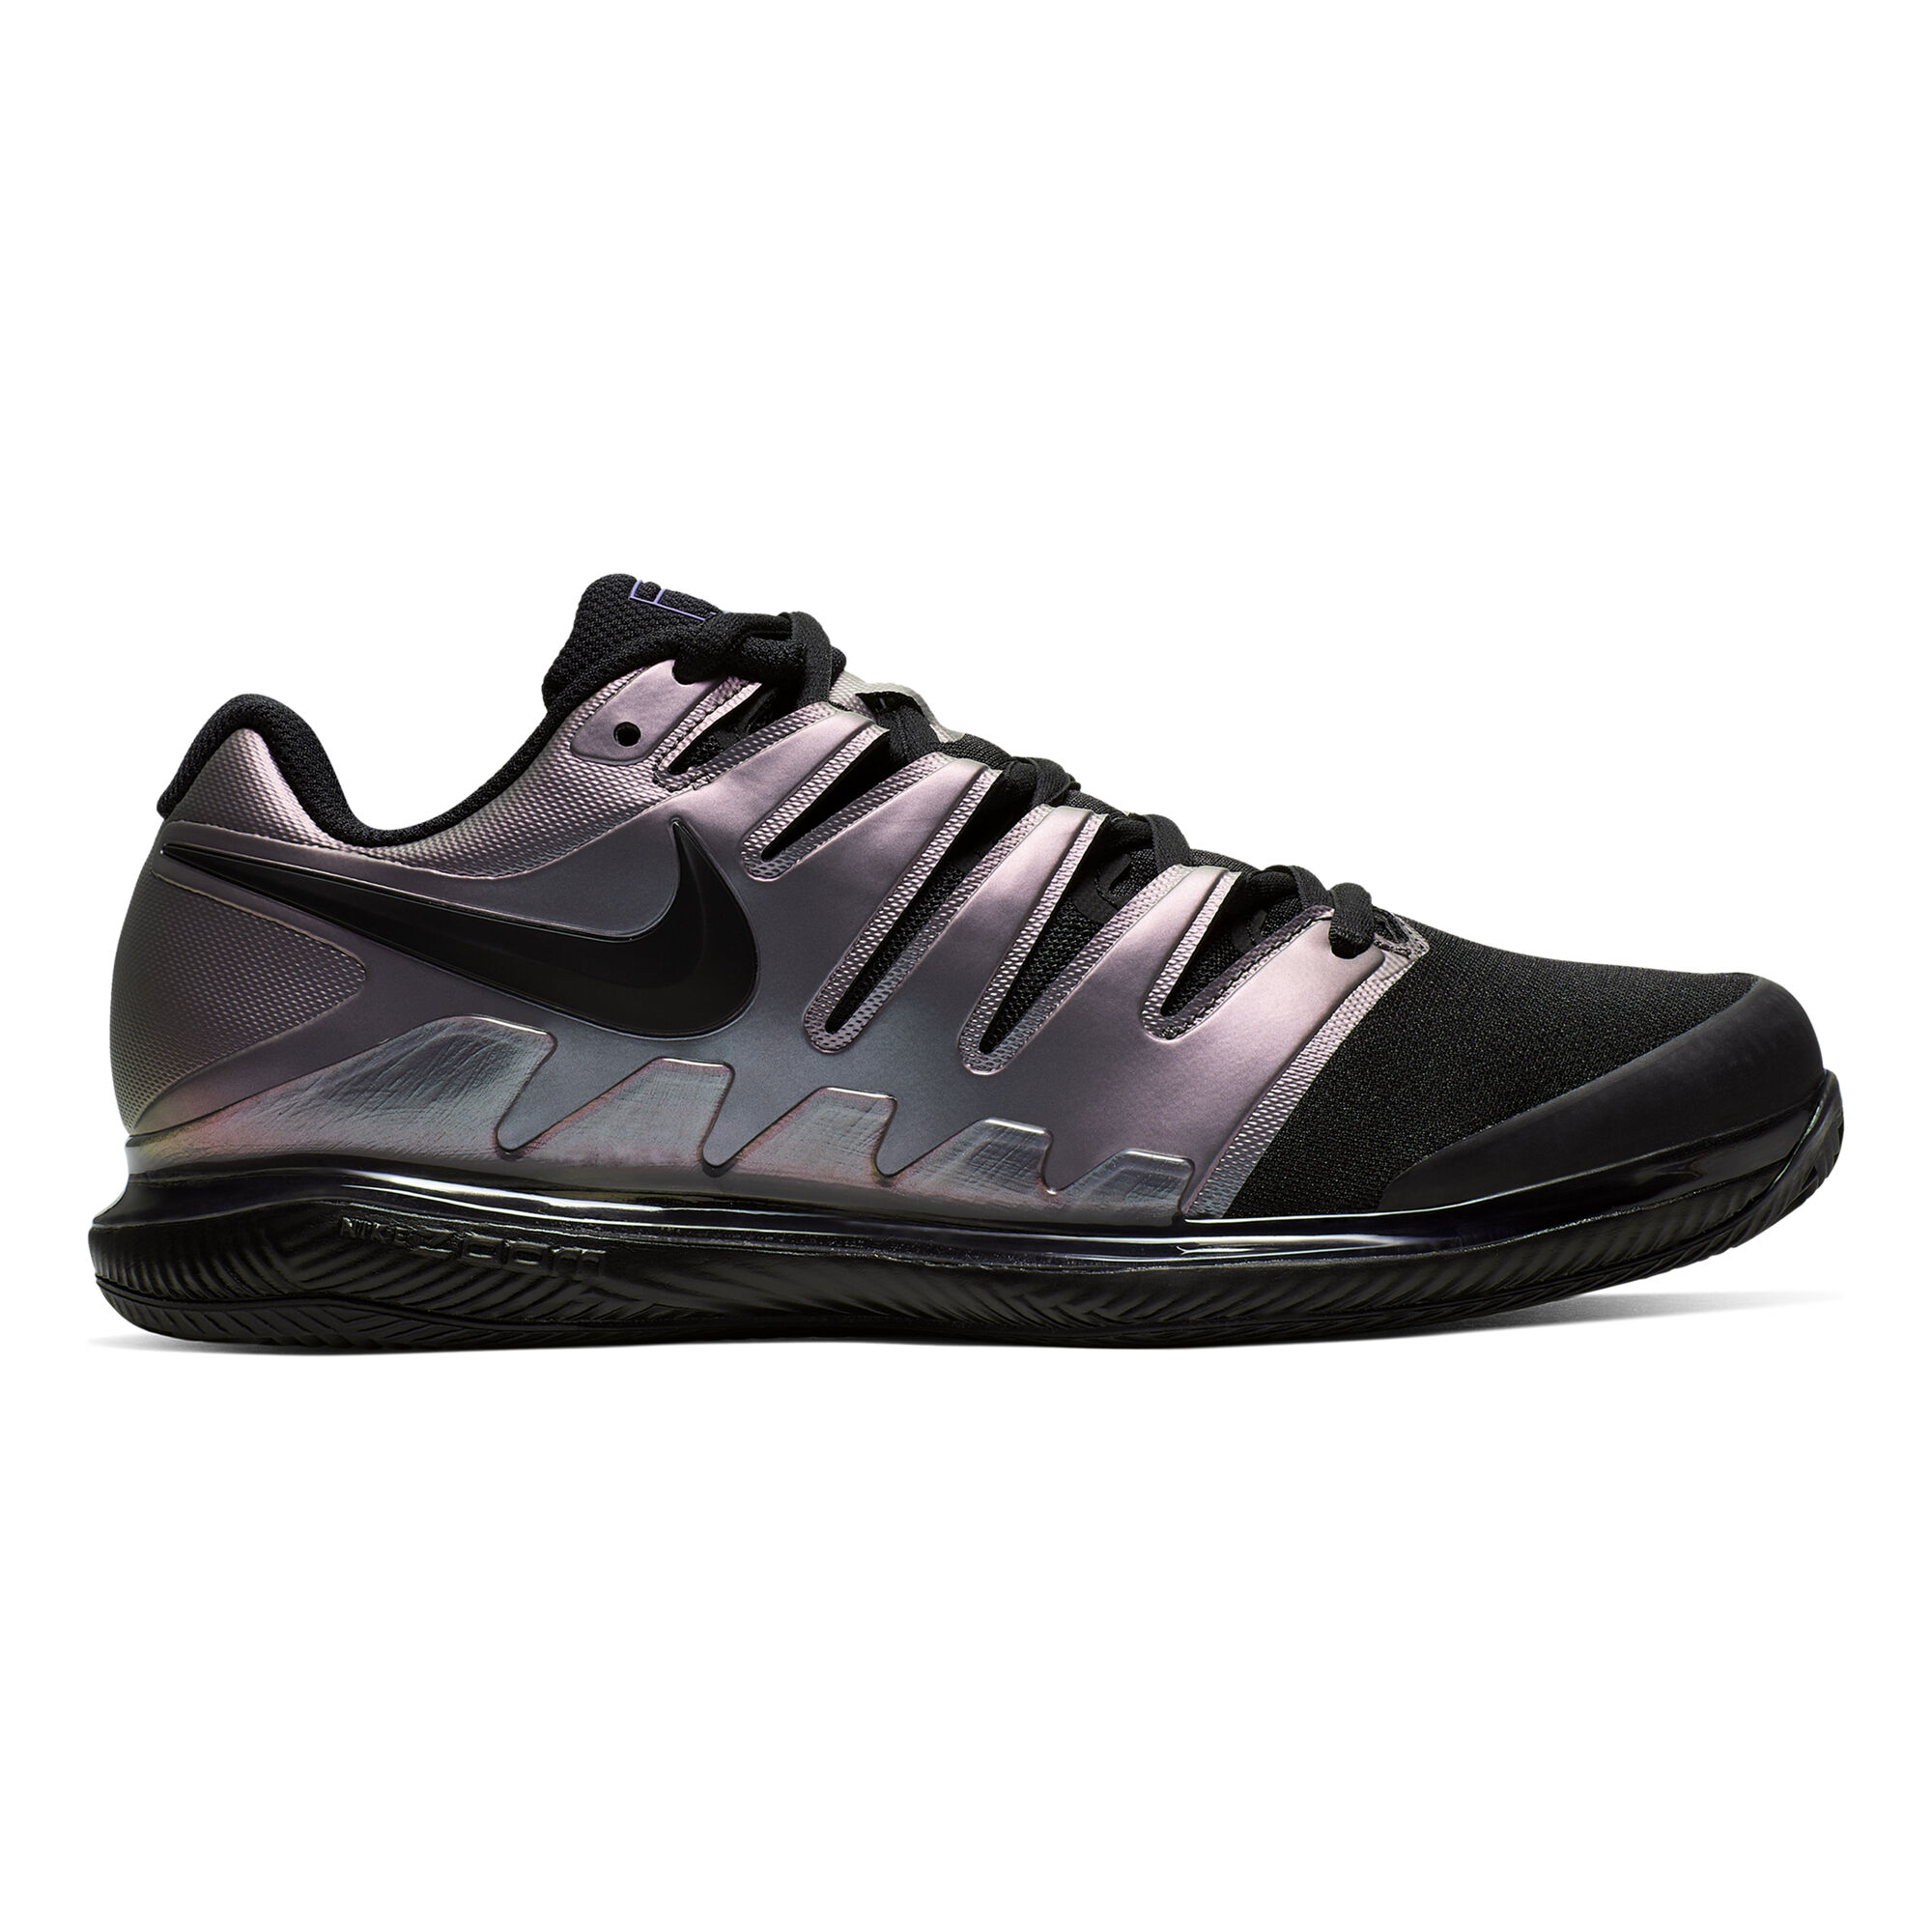 brandy Rodeado poetas buy Nike Air Zoom Vapor X Clay Court Shoe Men - Lilac, Black online |  Tennis-Point